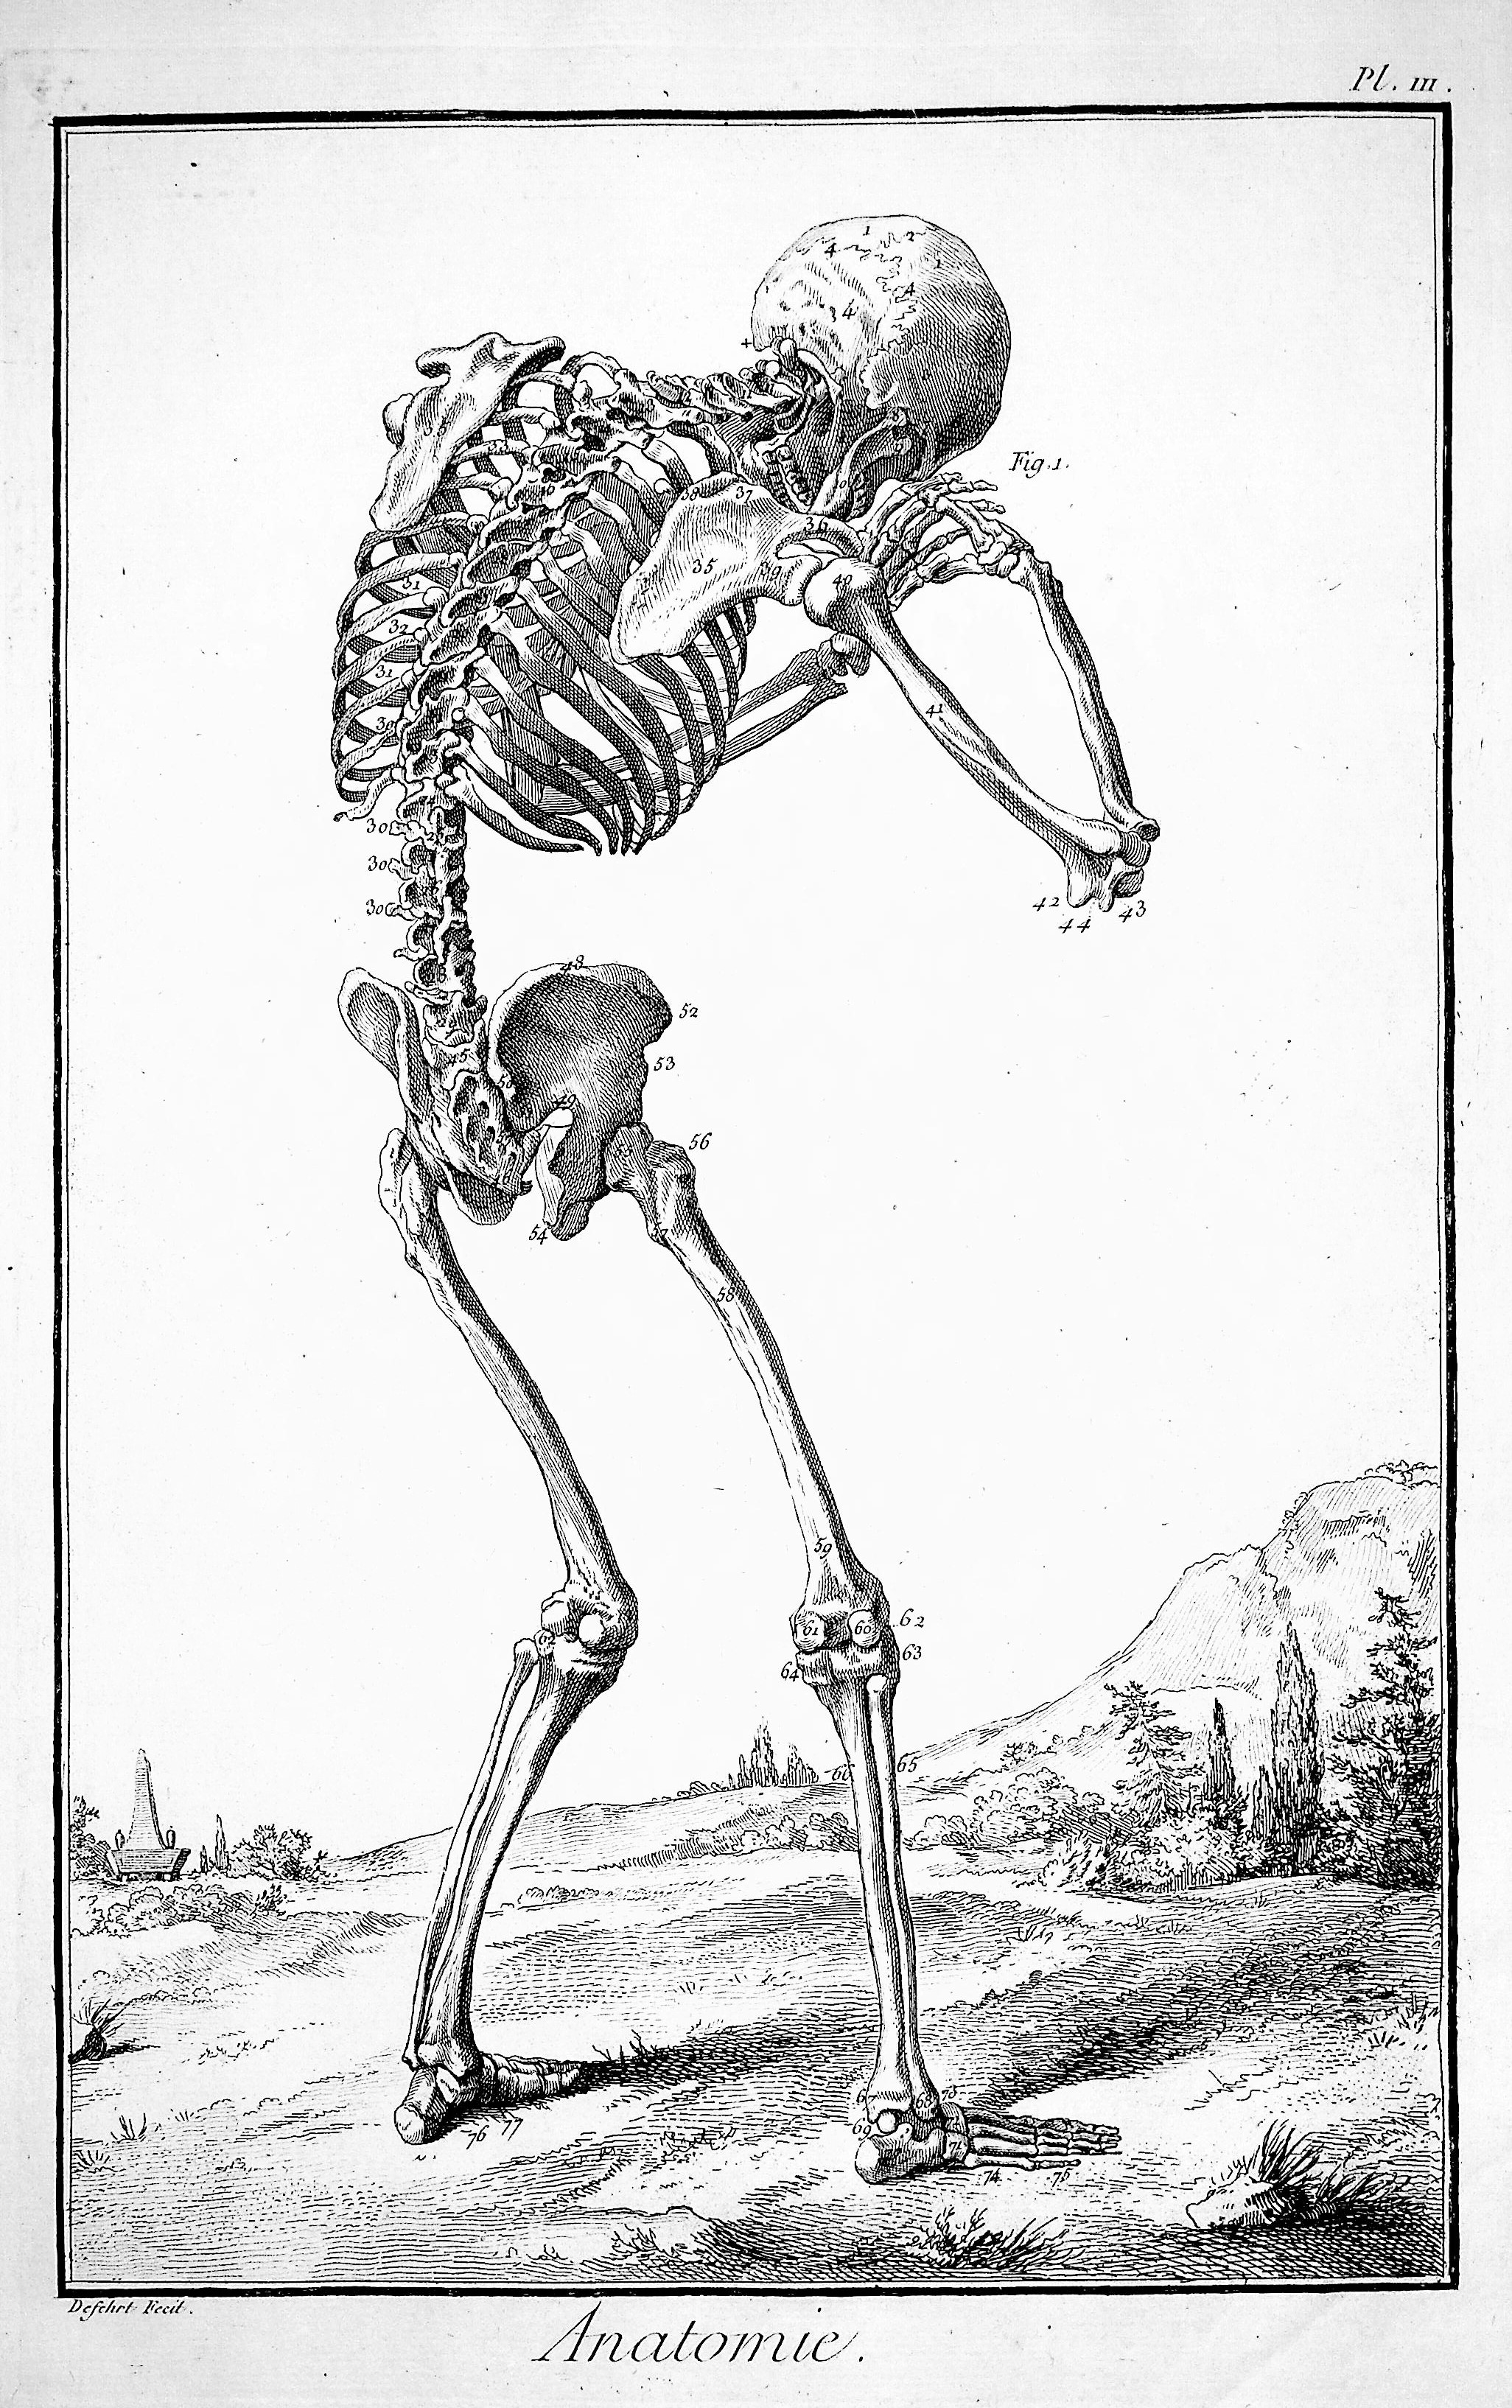 Image for Encyclopedie, Anatomie Plate III. The skeleton seen from behind, after Vesalius